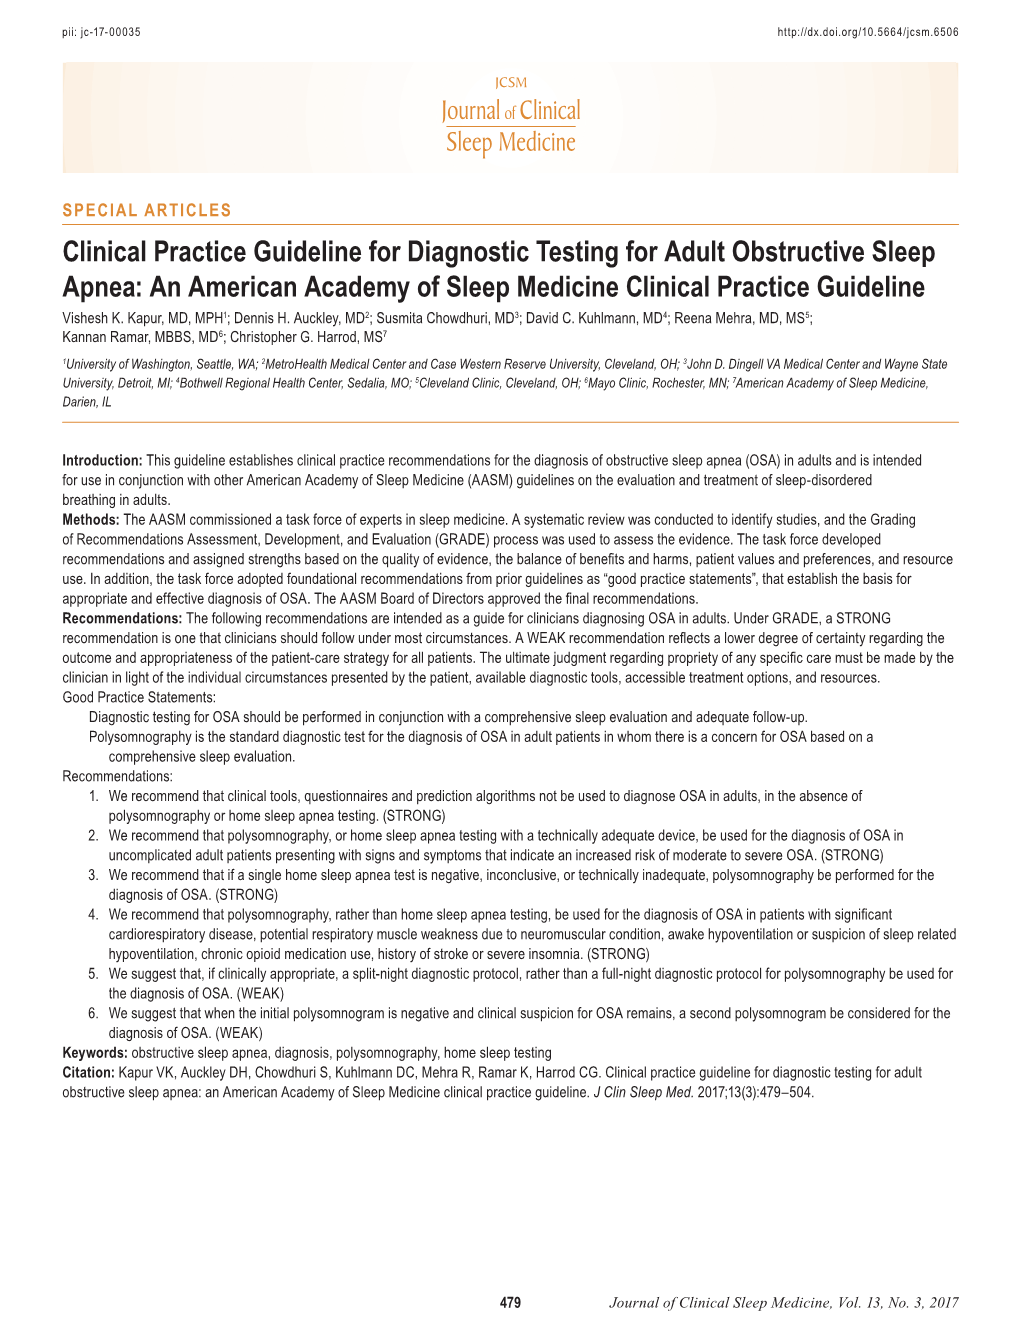 Clinical Practice Guideline for Diagnostic Testing for Adult Obstructive Sleep Apnea: an American Academy of Sleep Medicine Clinical Practice Guideline Vishesh K